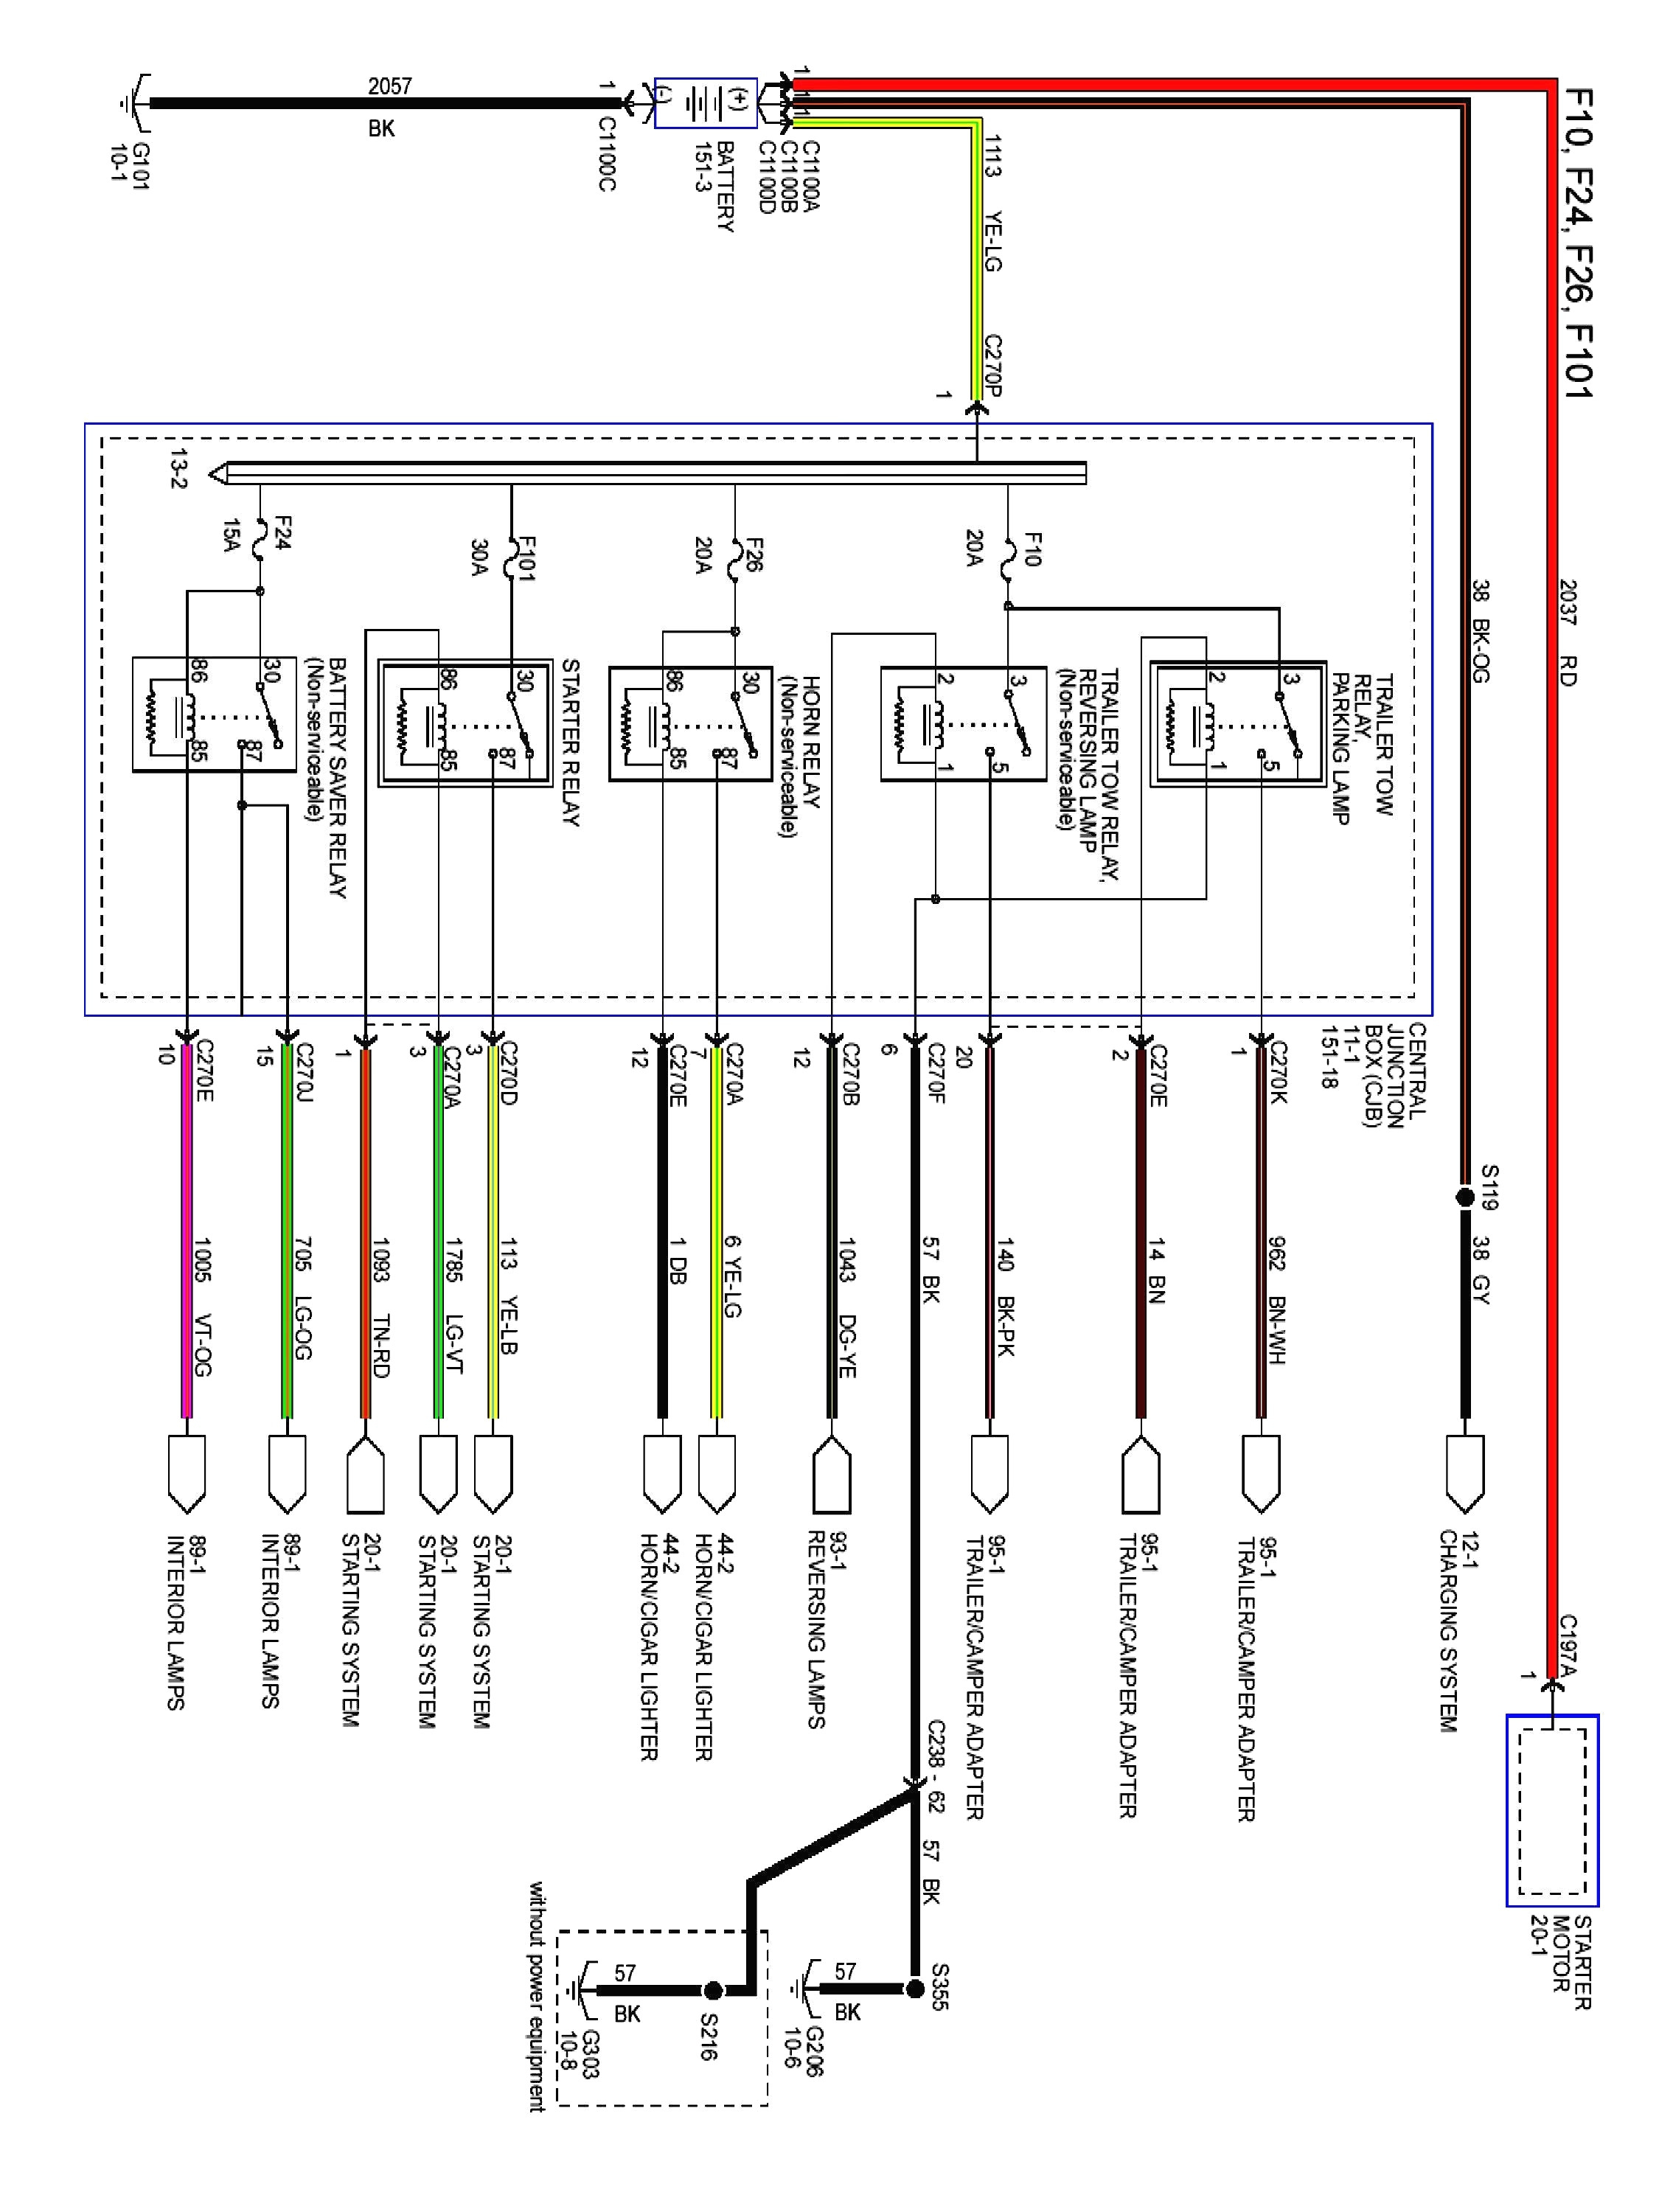 circuit diagram hqew net wiring diagram datasource circuit diagram hqew net